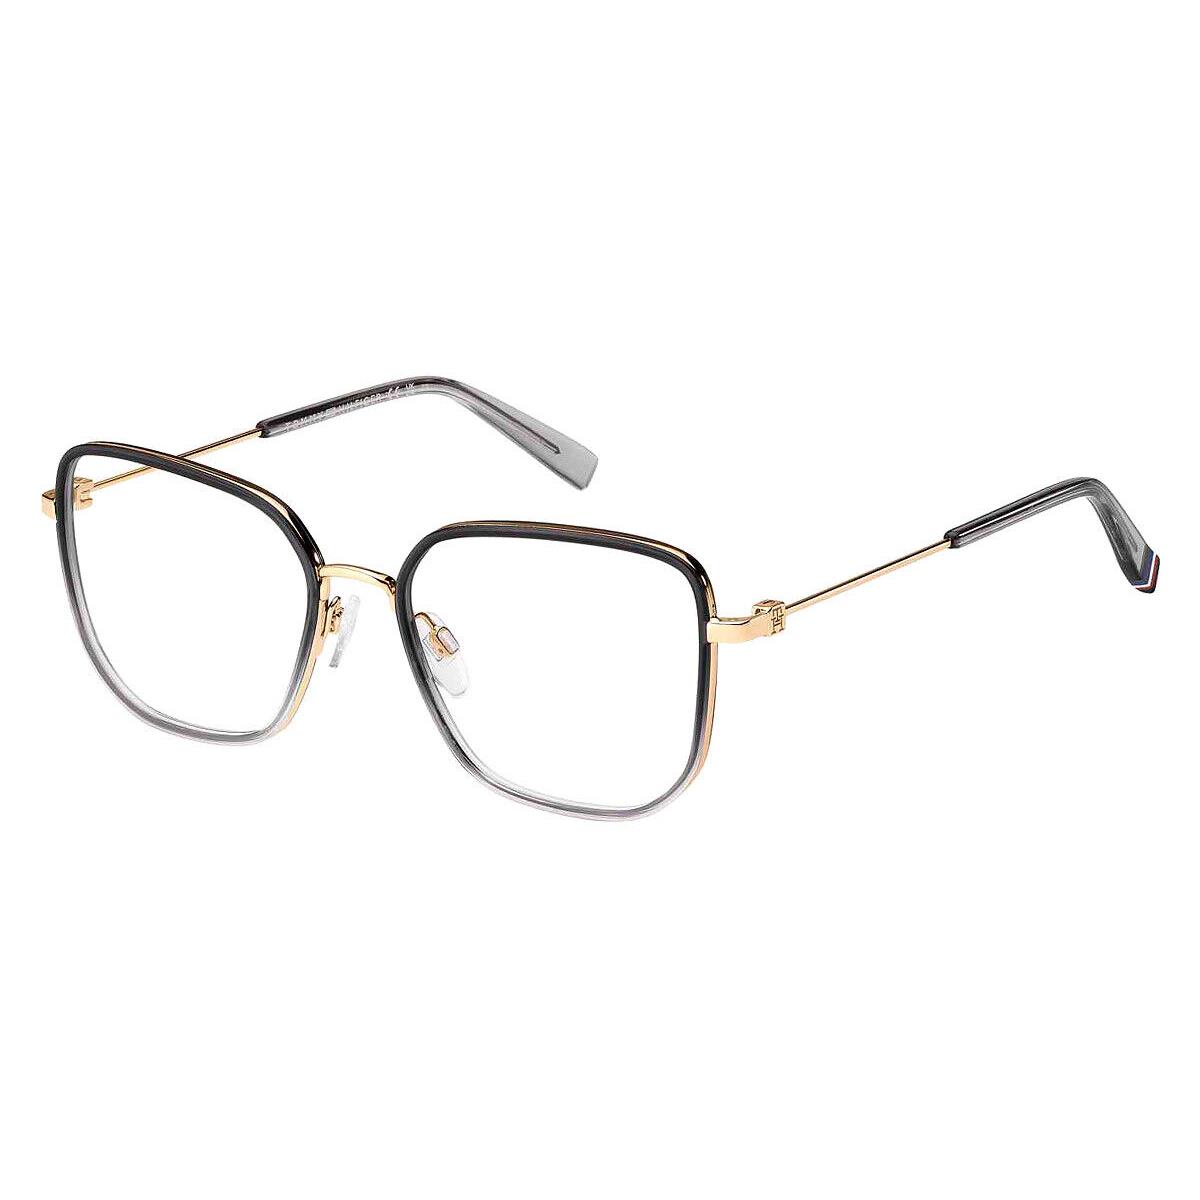 Tommy Hilfiger Thf Eyeglasses Women Gray 53mm - Frame: Gray, Lens: Demo